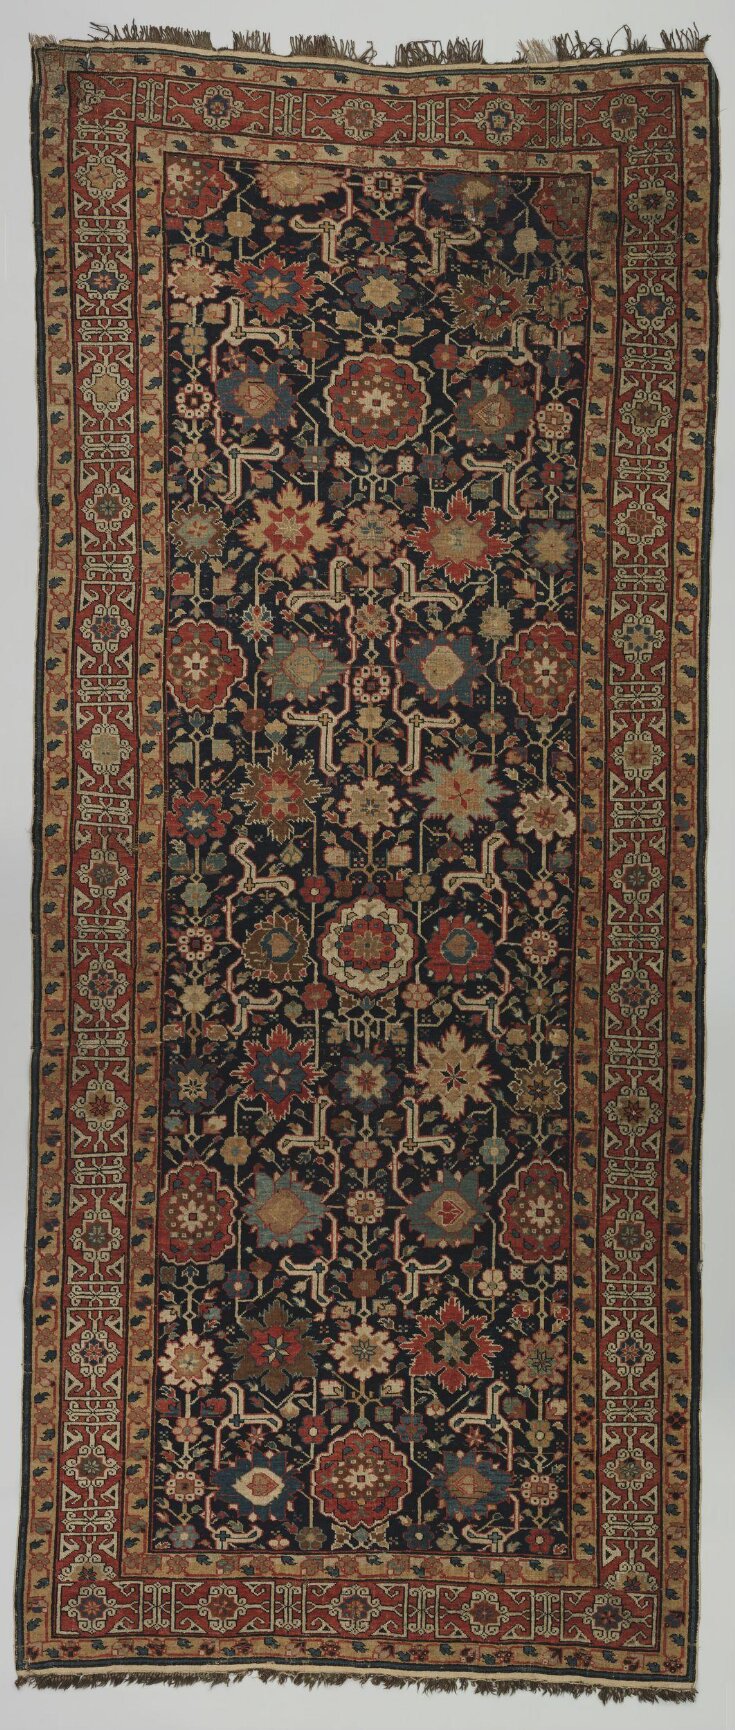 Carpet top image